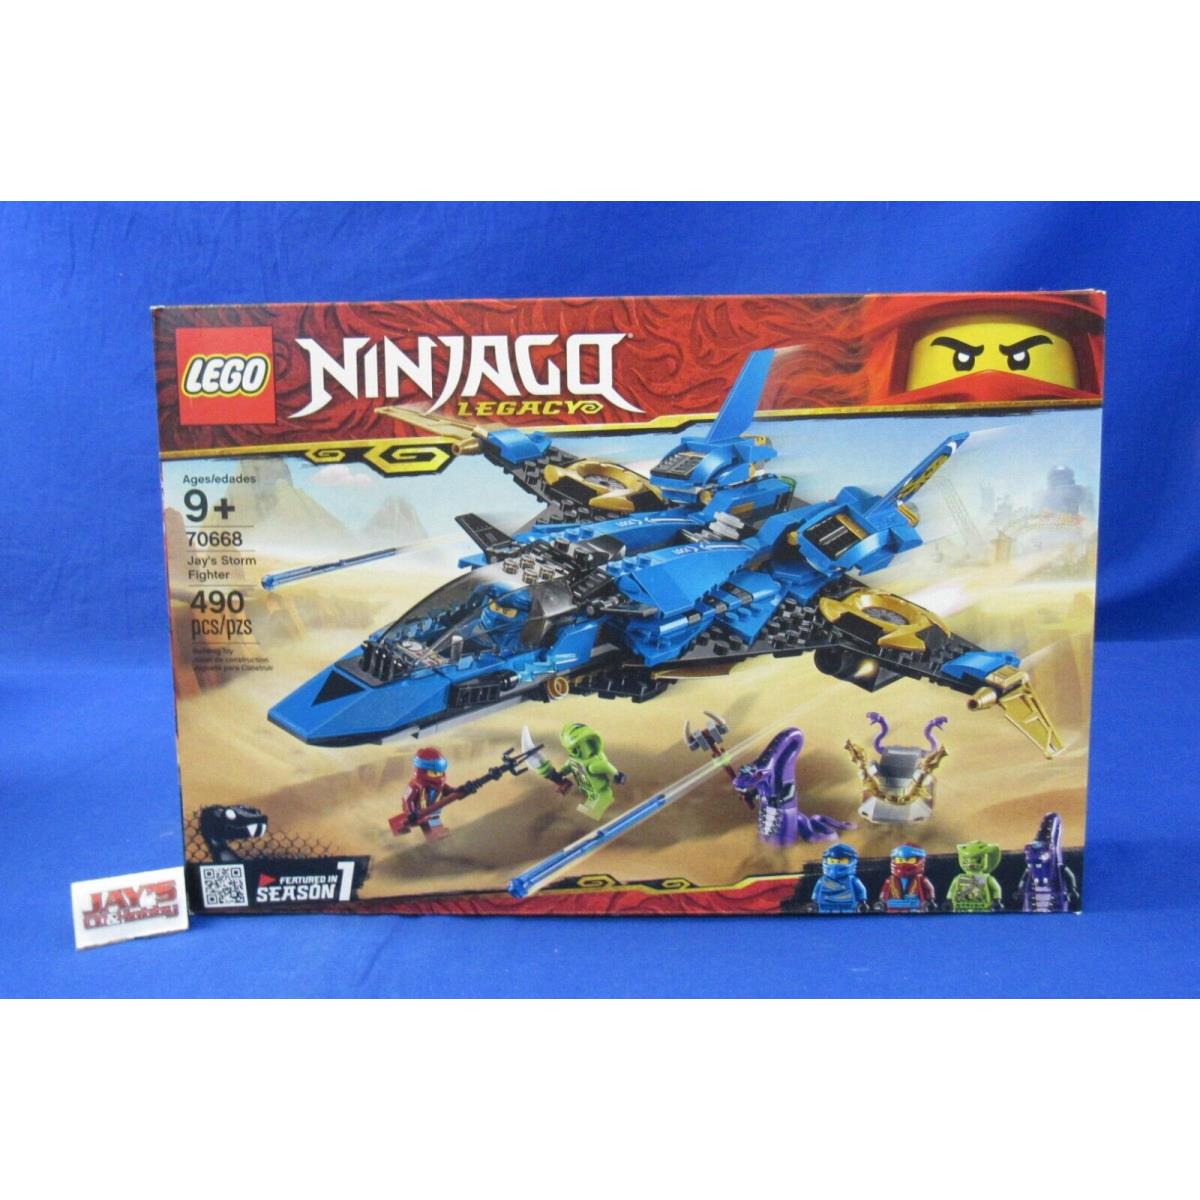 Lego 70668 Ninjago Legacy Jay`s Storm Fighter 490 Pieces